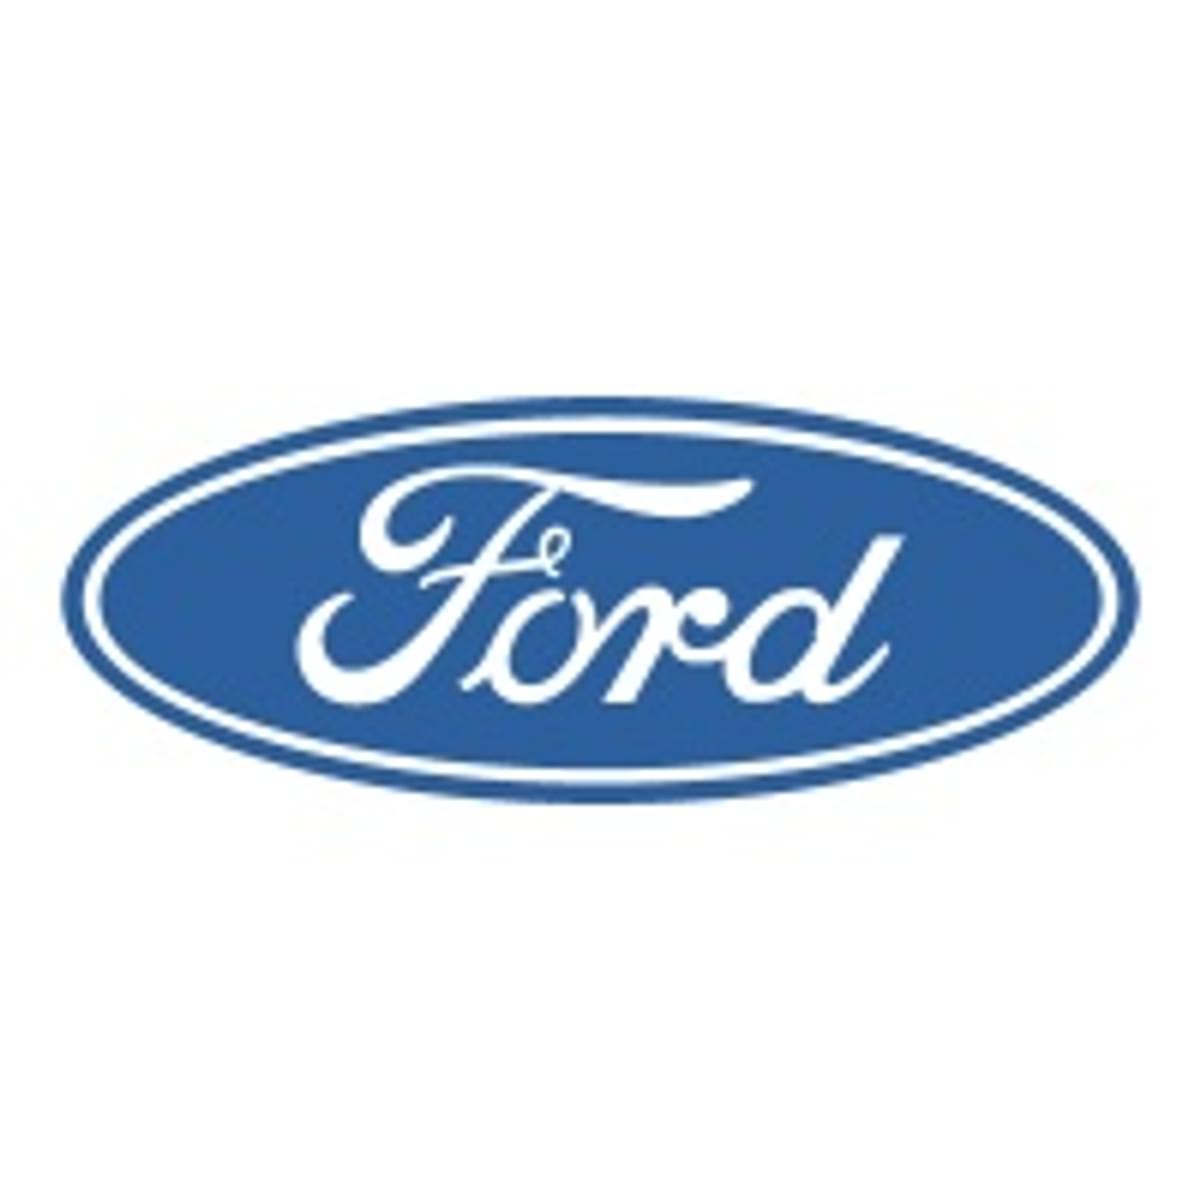 Ford en Google sluiten strategisch partnership image